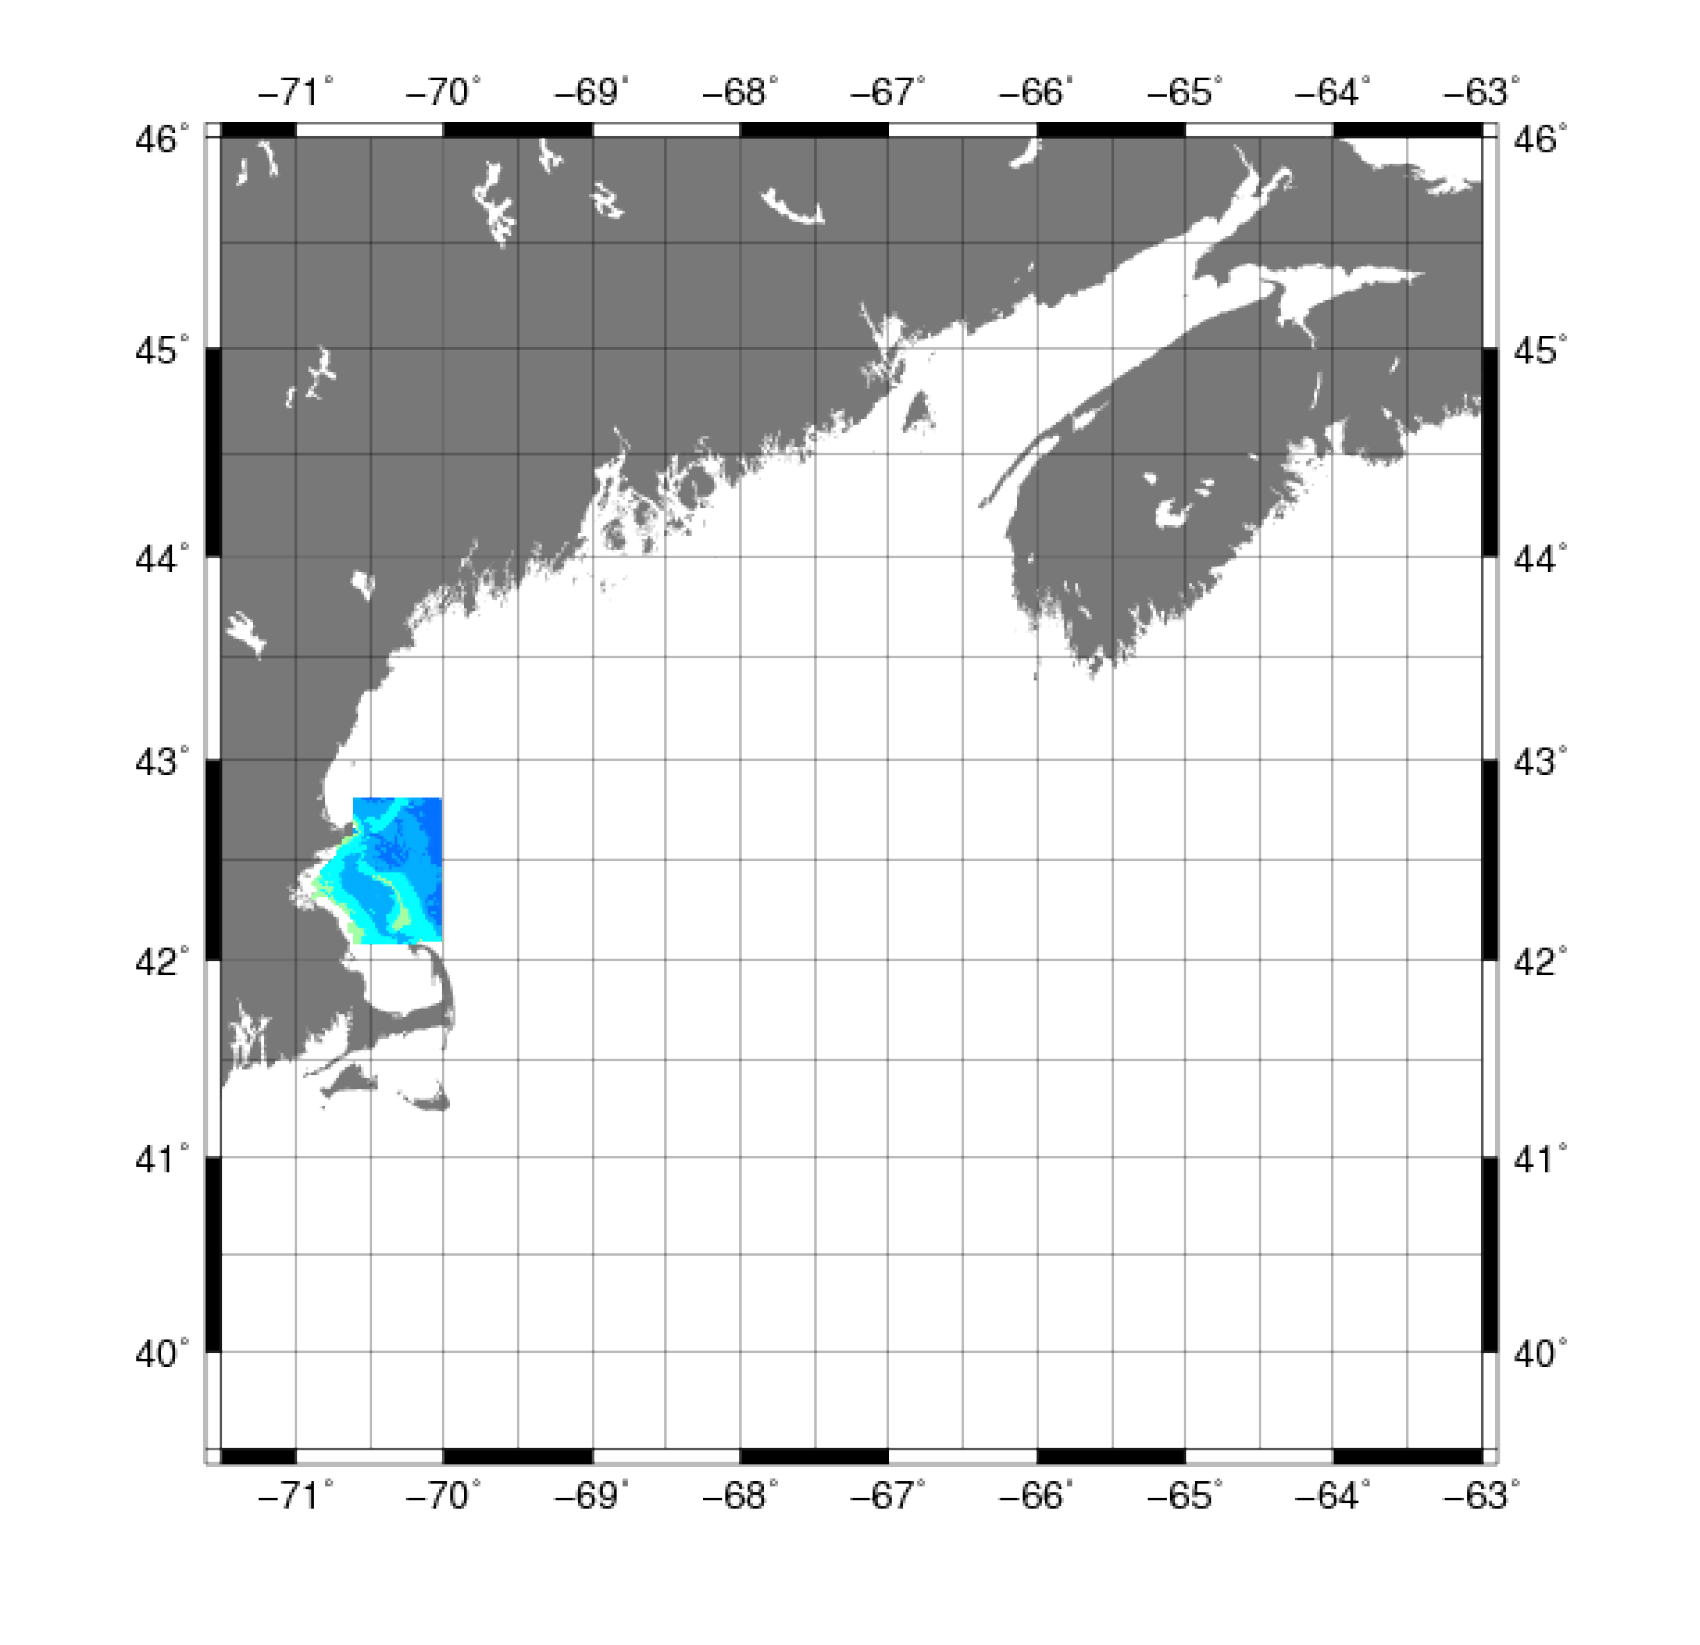 USGS Massachusetts Bay bathymetry grid